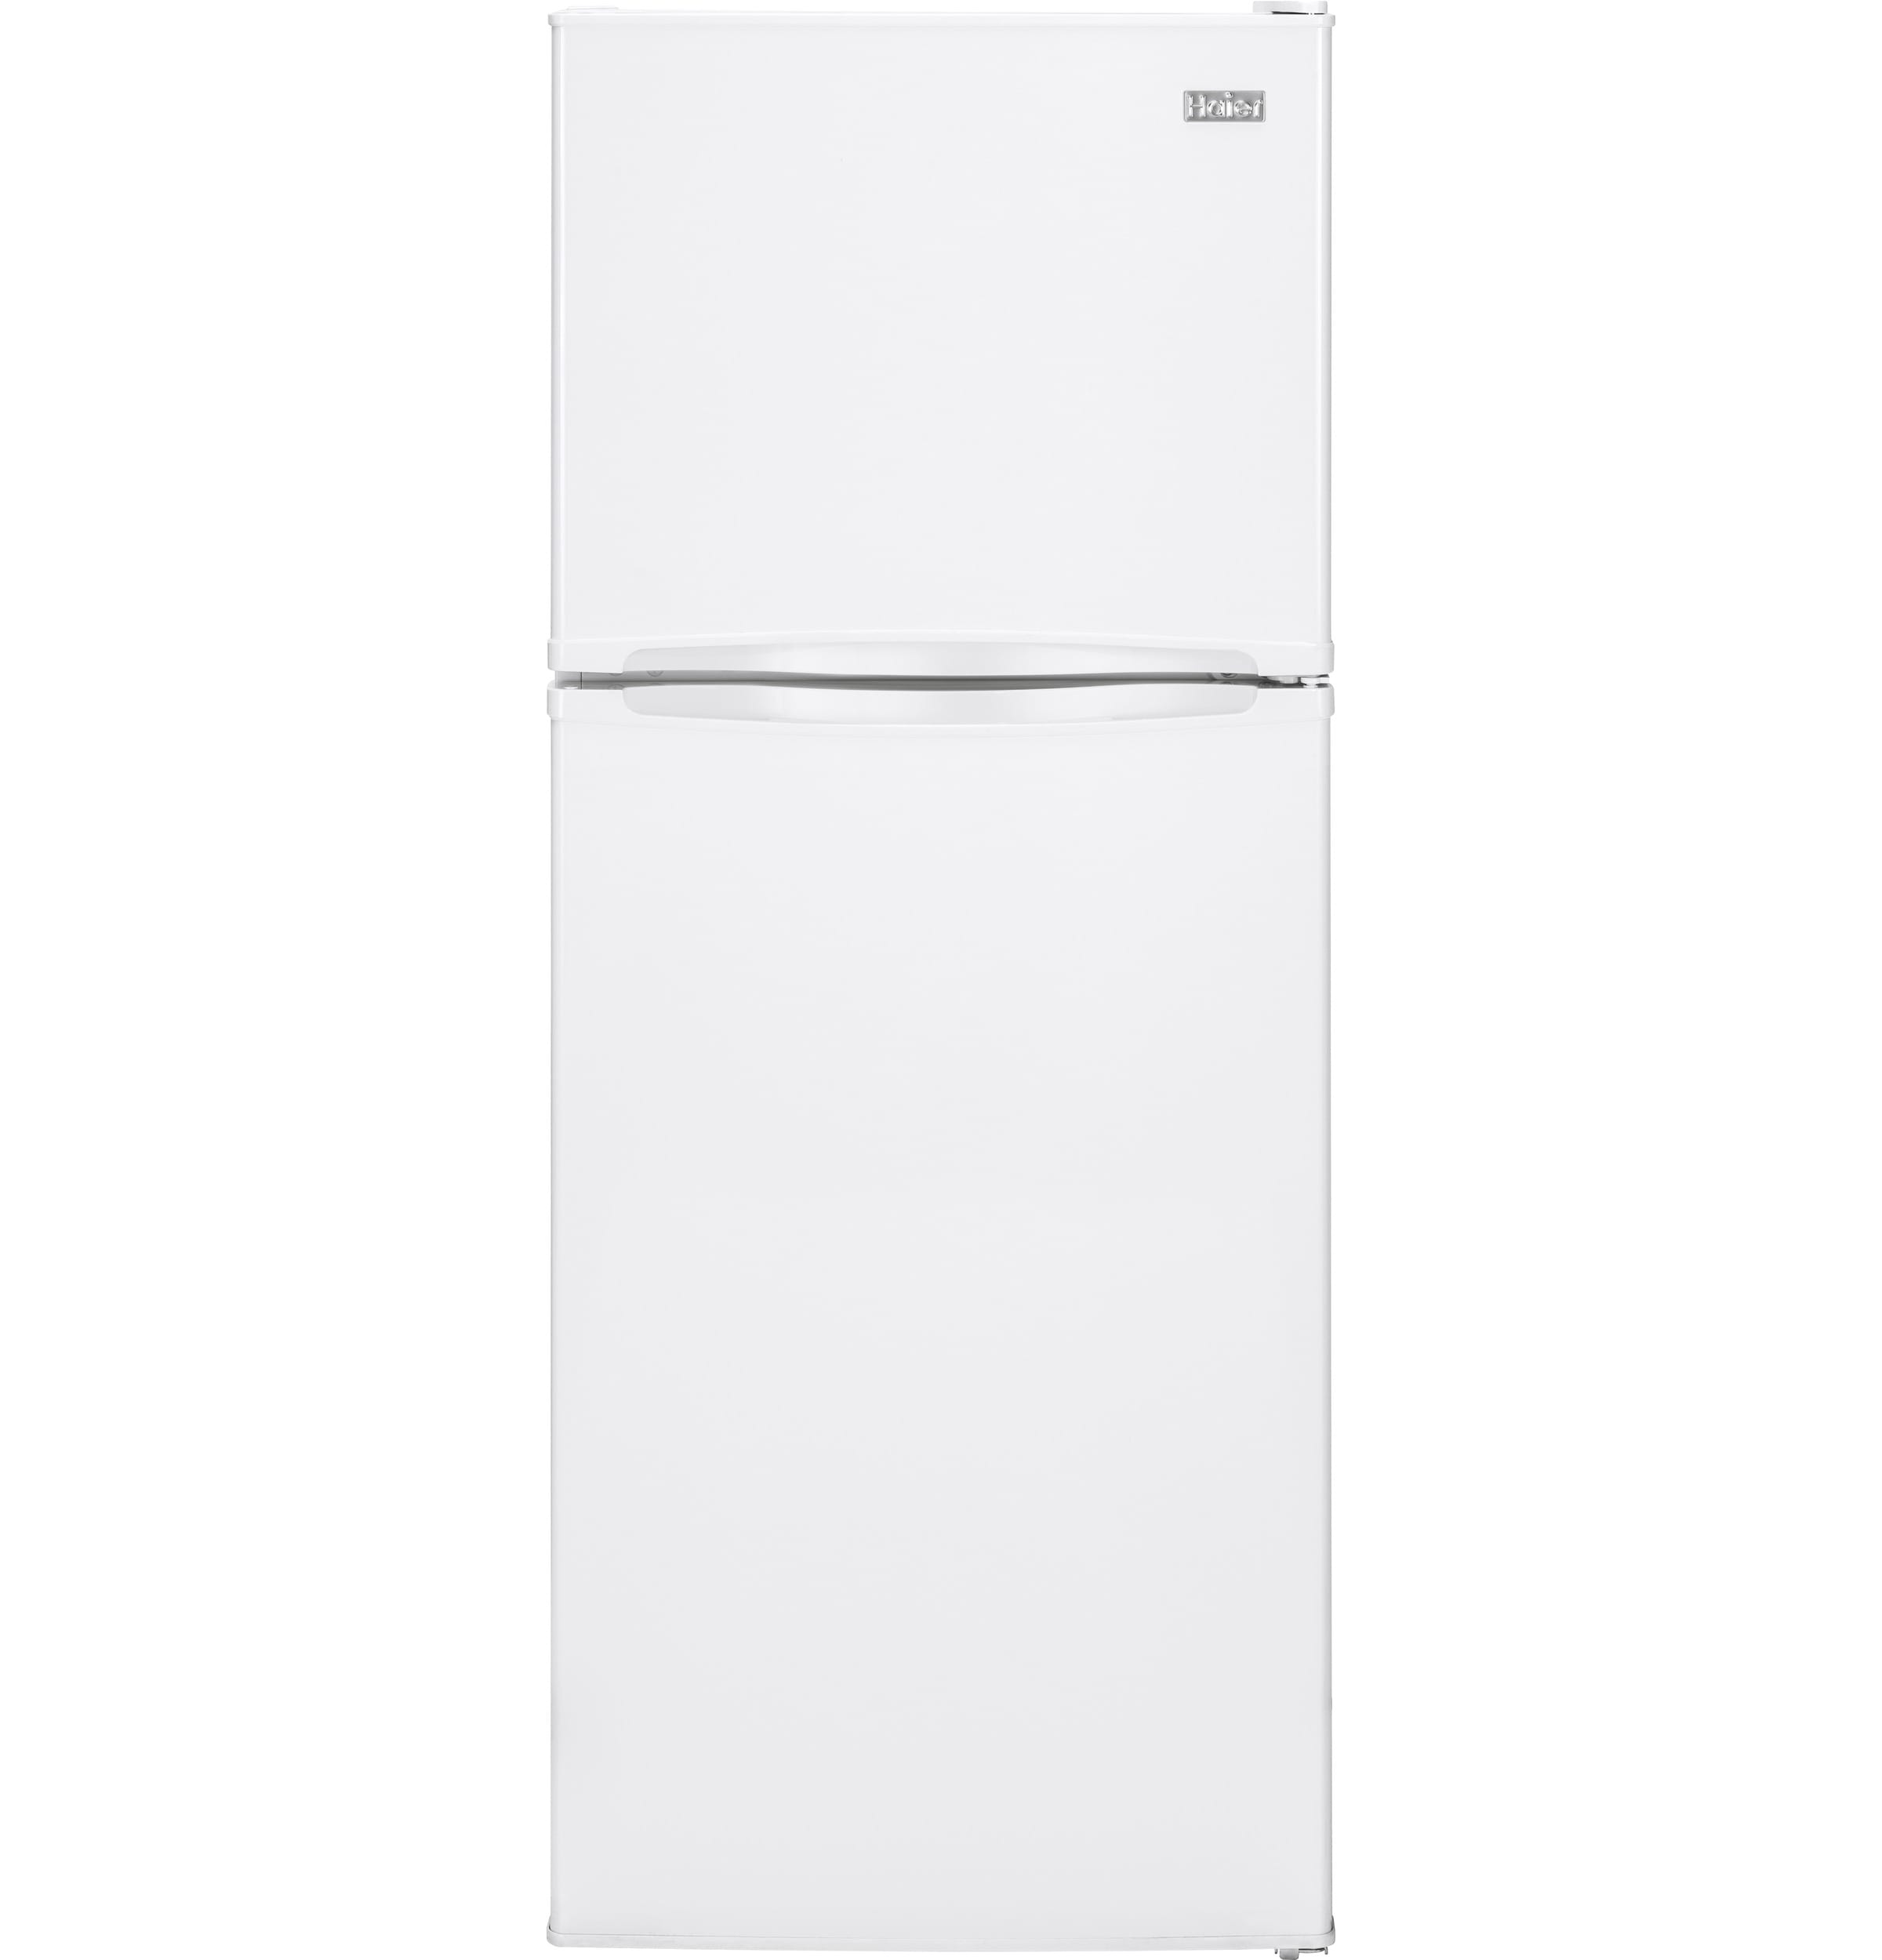 HA10TG21SS by Haier - 9.8 Cu. Ft. Top Freezer Refrigerator